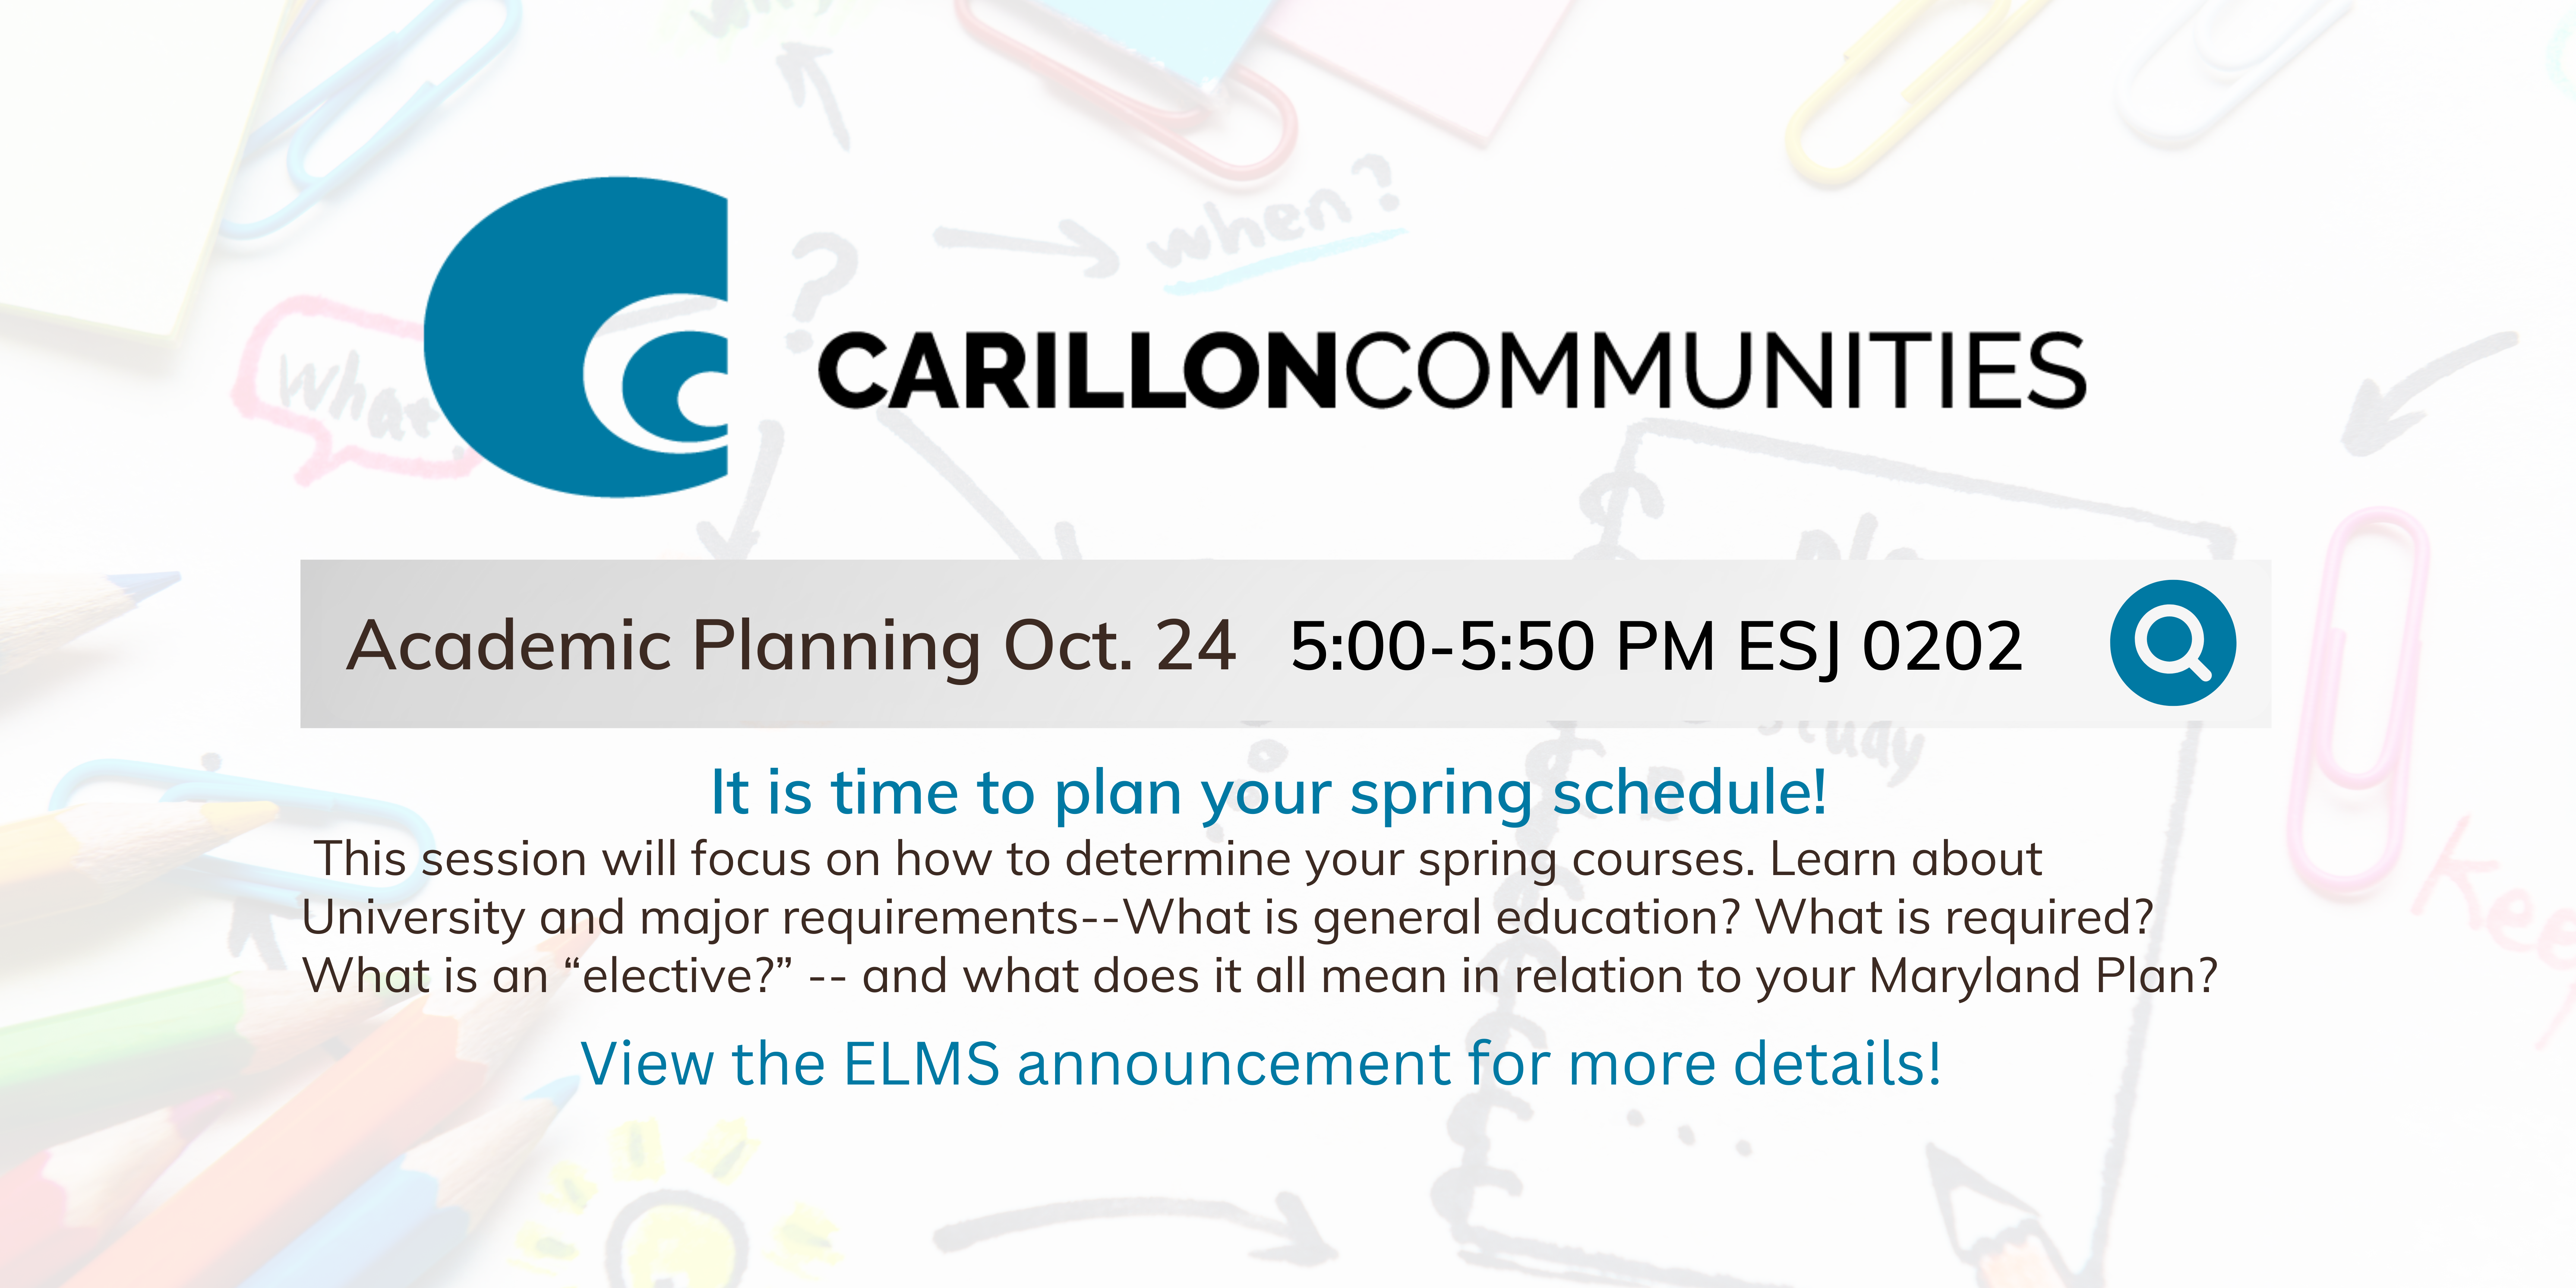 Academic Planning Oct. 24 5:00-5:50 PM